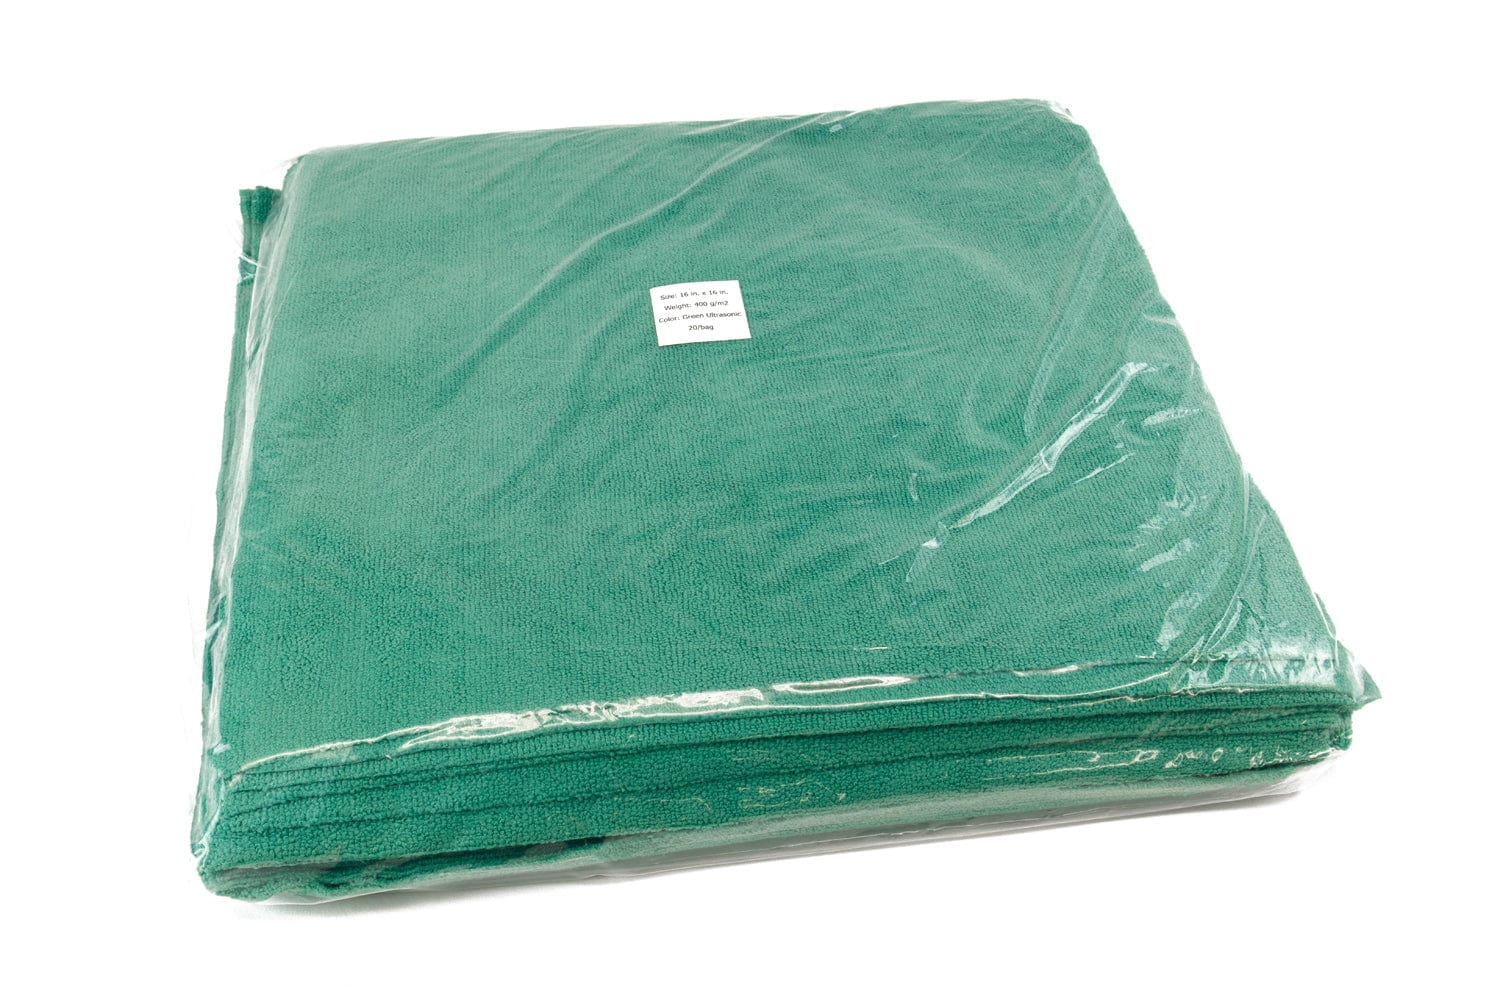 Autofiber Towel FULL CASE [Utility 400v] Edgeless Microfiber Cleaning Towel 16"x16" - 200/case